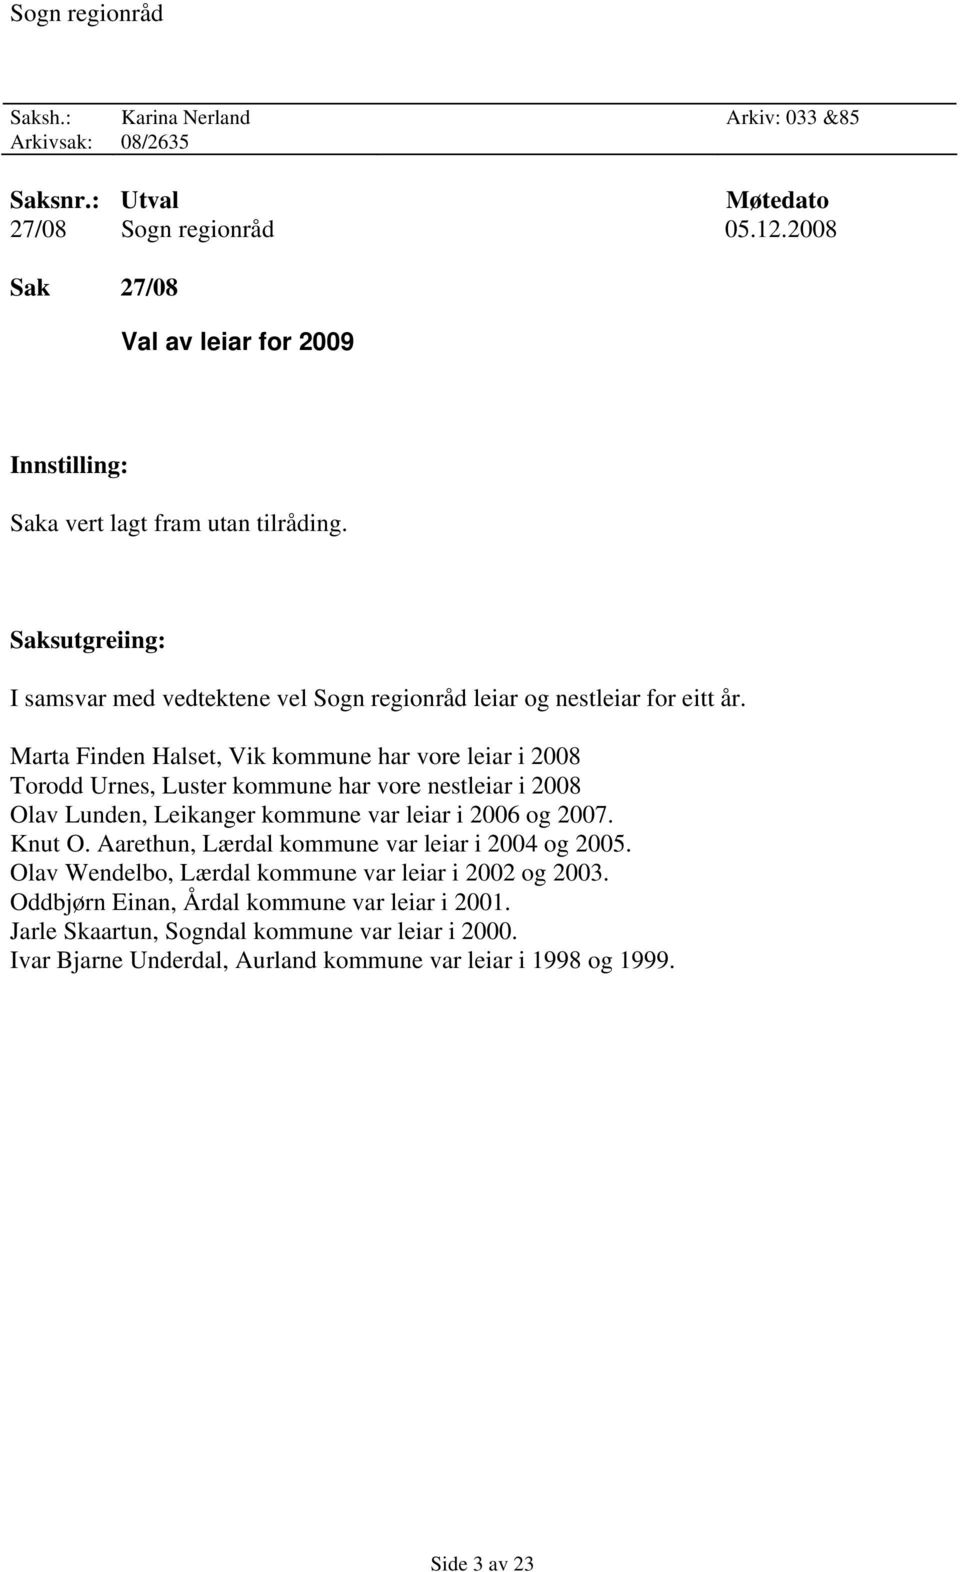 Marta Finden Halset, Vik kommune har vore leiar i 2008 Torodd Urnes, Luster kommune har vore nestleiar i 2008 Olav Lunden, Leikanger kommune var leiar i 2006 og 2007. Knut O.